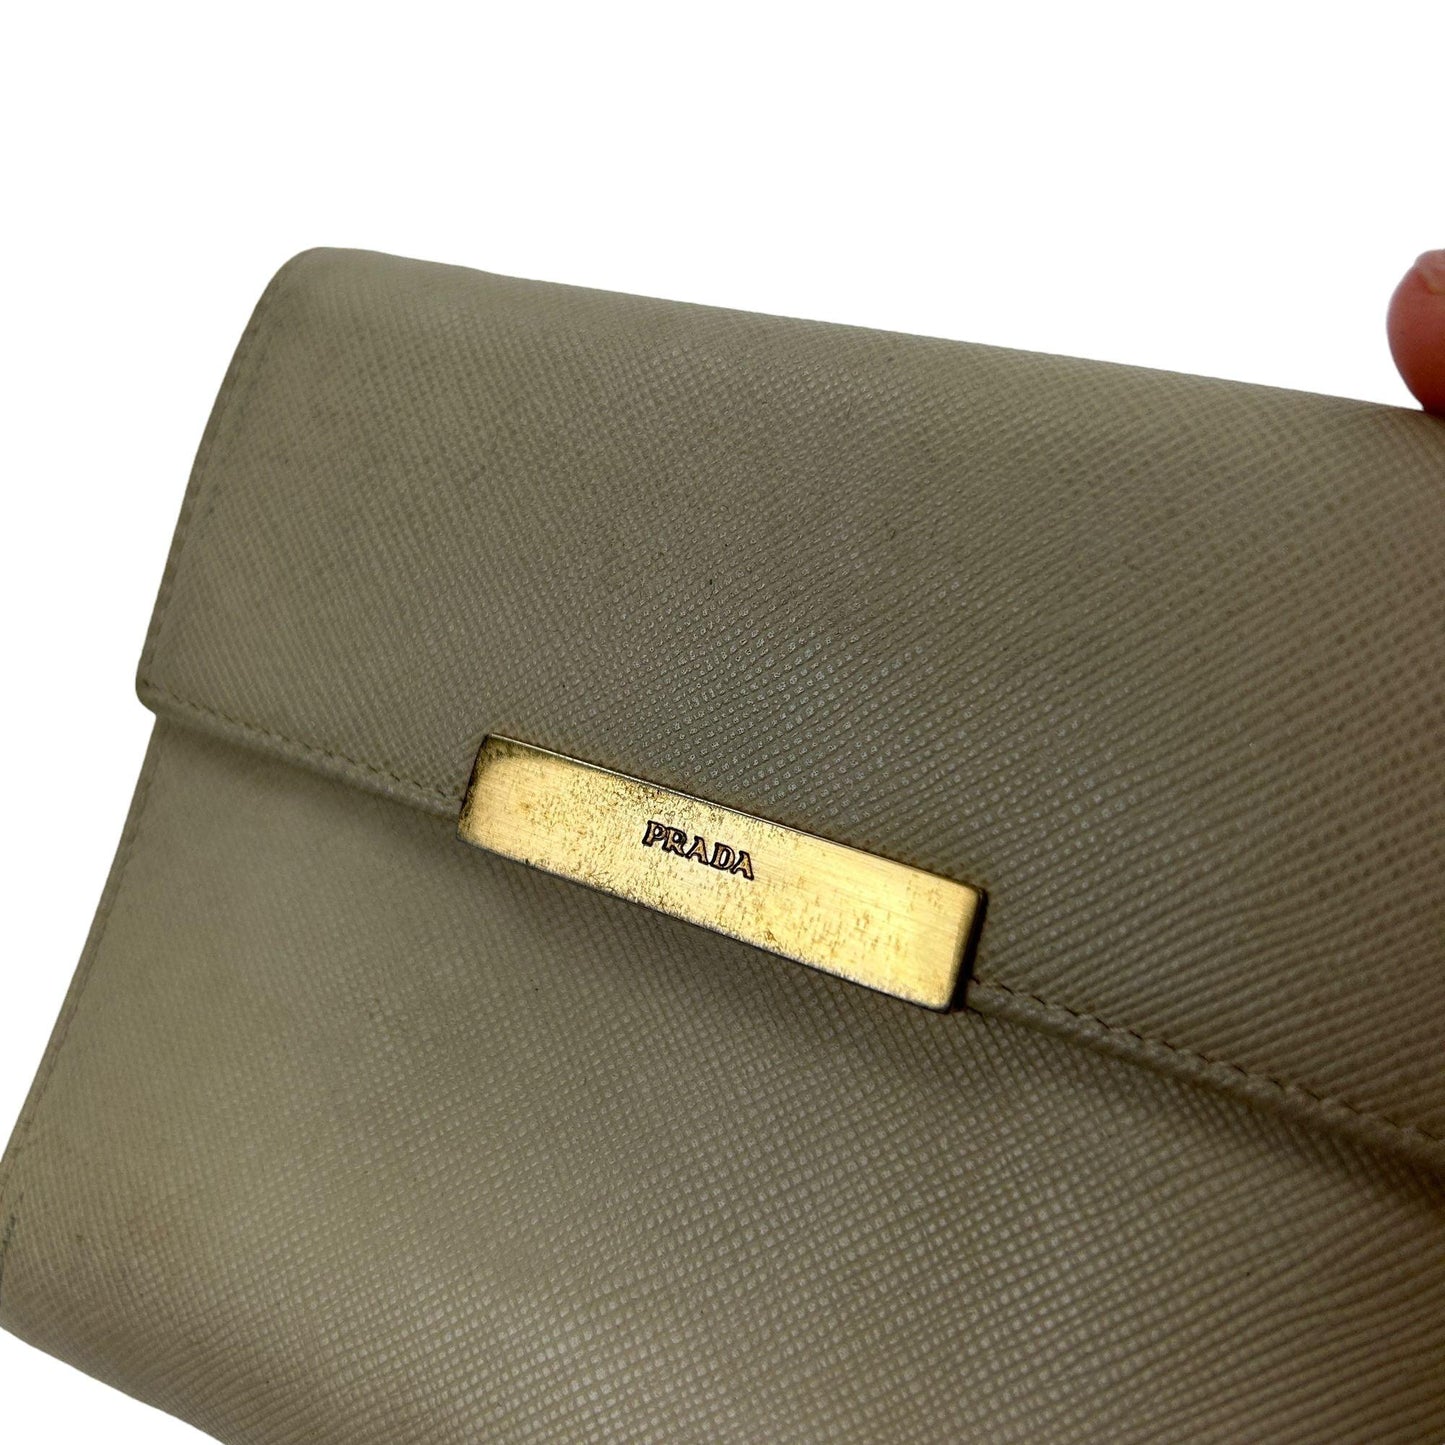 Vintage Prada Leather Wallet - Known Source